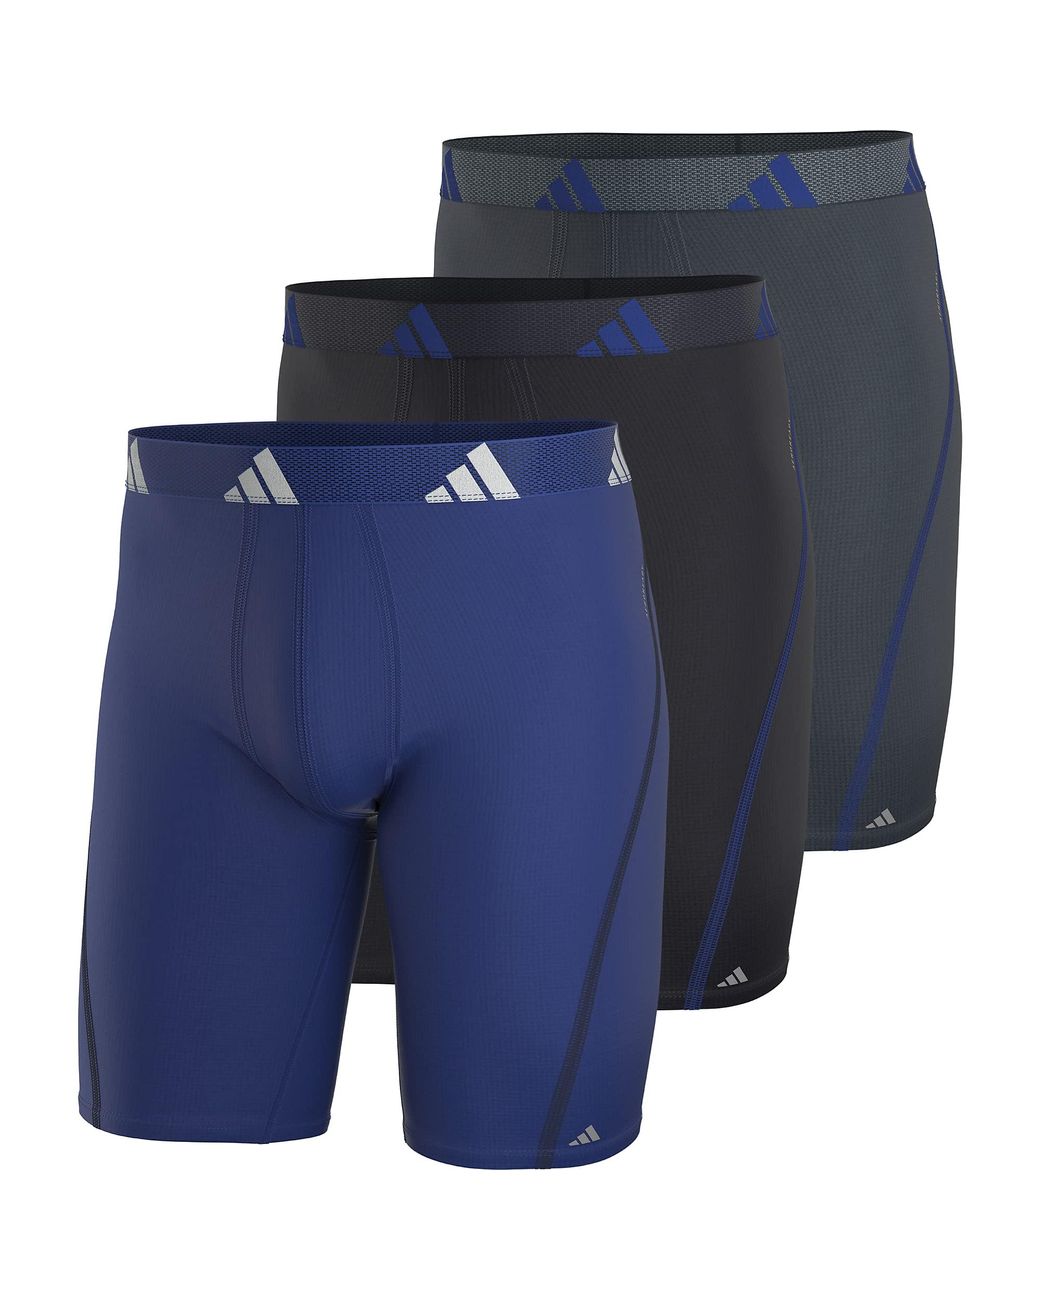 adidas Performance Mesh Long Boxer Brief Underwear in Blue for Men